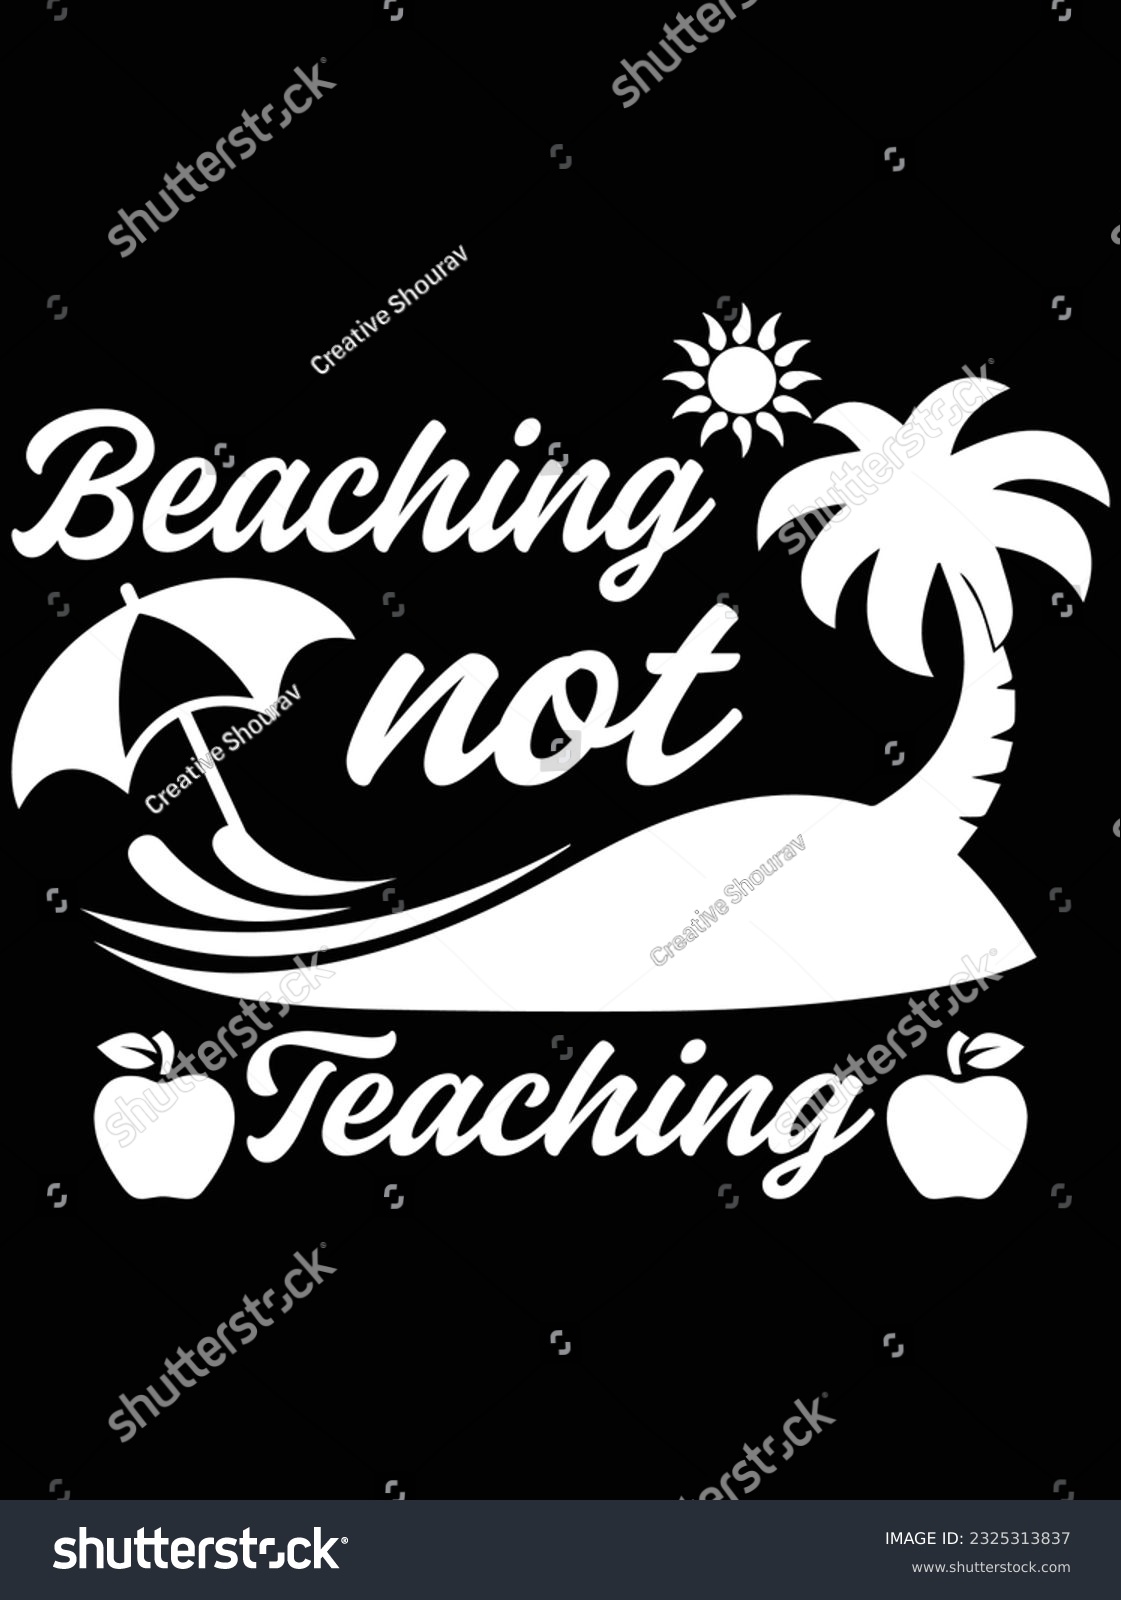 SVG of Beaching not teaching vector art design, eps file. design file for t-shirt. SVG, EPS cuttable design file svg